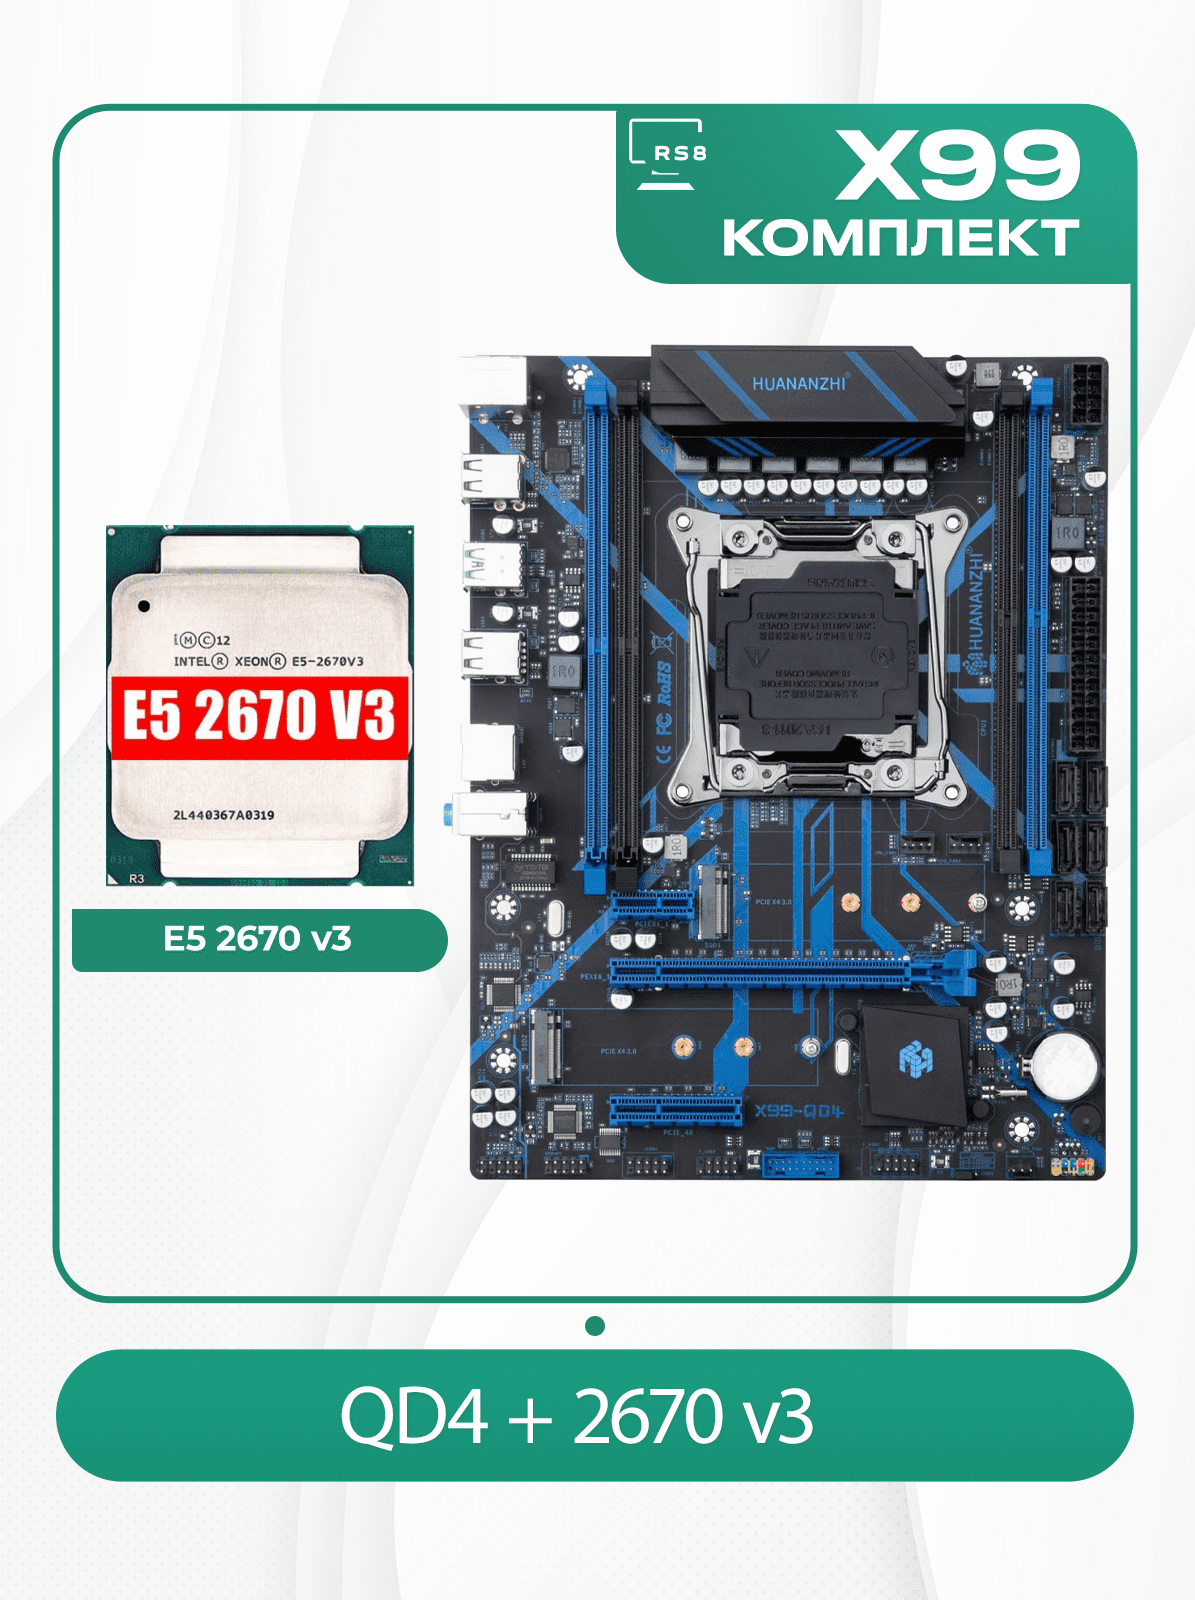 Комплект материнской платы X99: Материнская плата 2011v3 Huananzhi QD4 Процессор Intel Xeon E5 2670v3